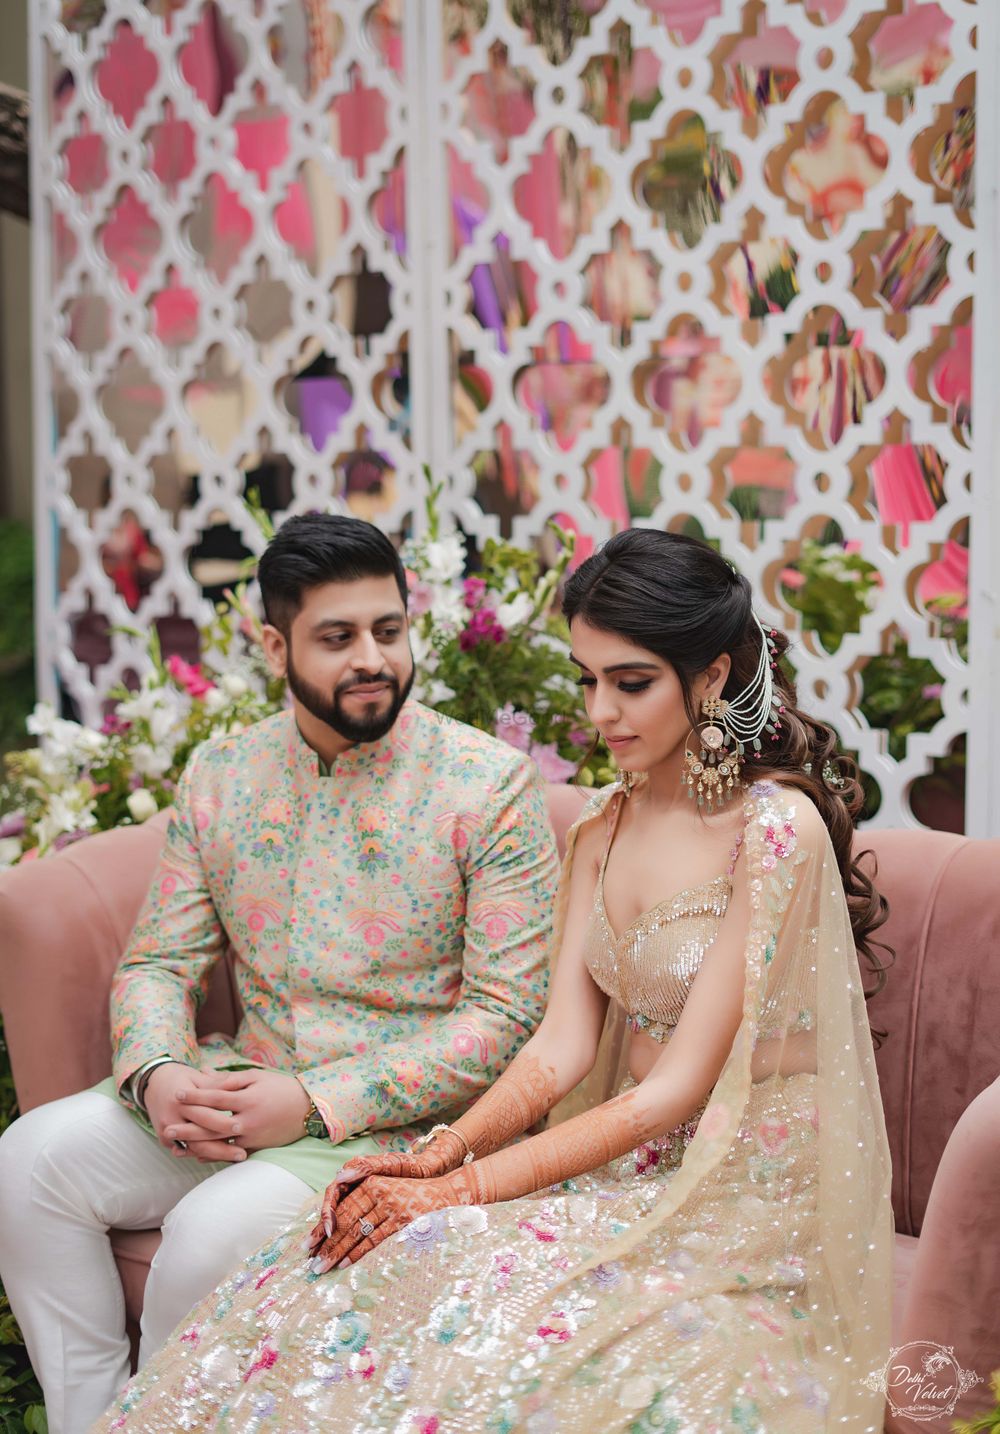 Photo of bride and groom on mehendi in all pastel looks